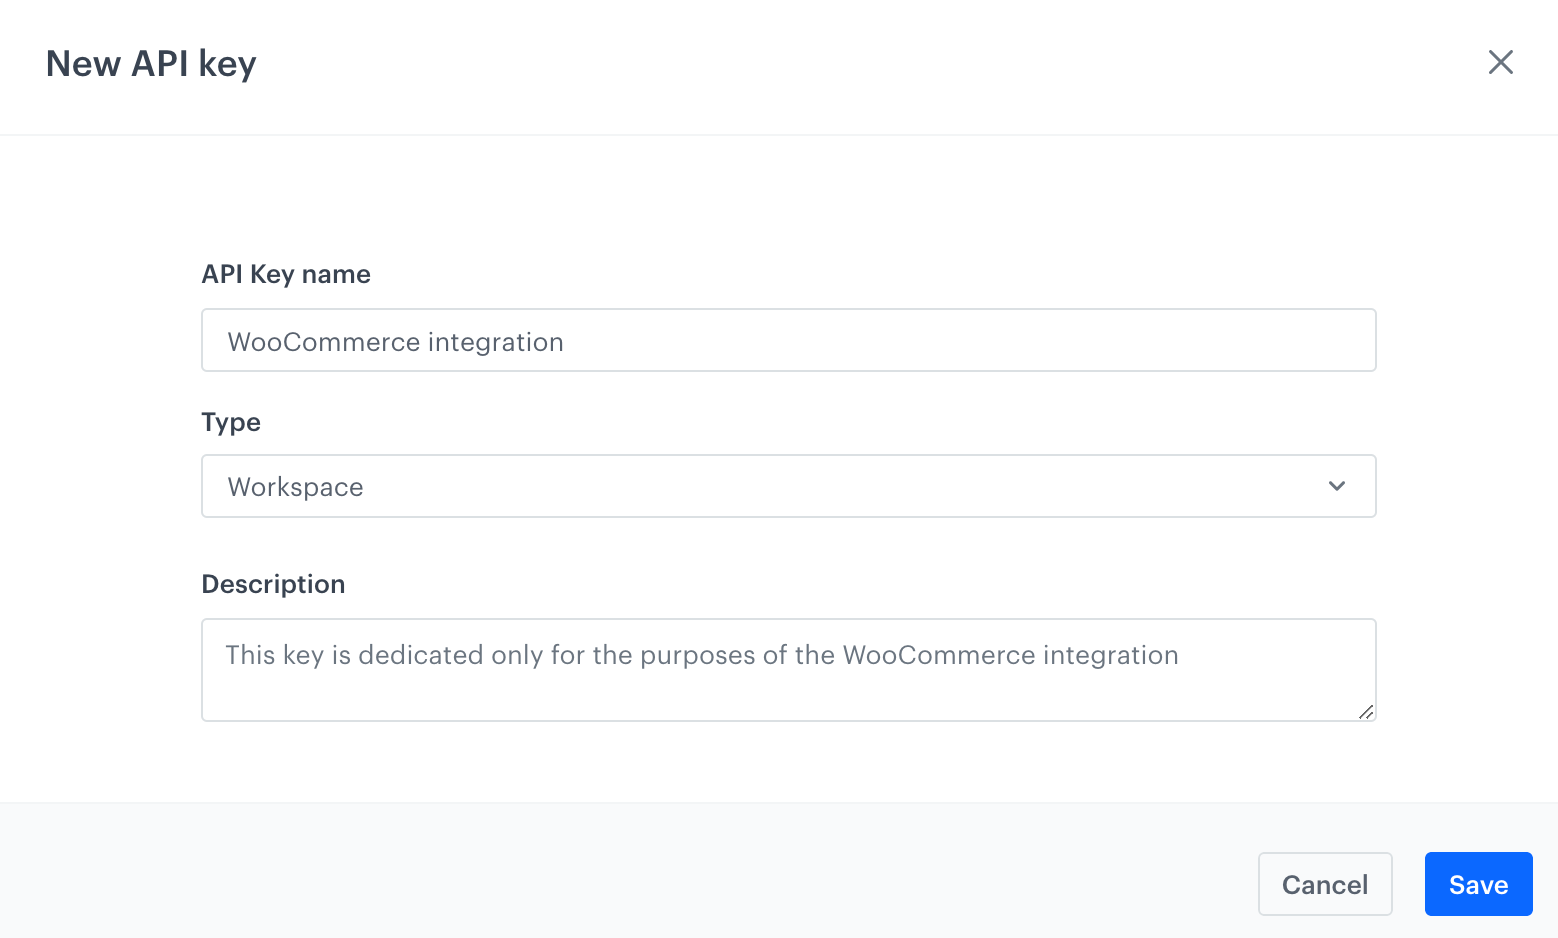 Adding a new API key for the WooCommerce integration